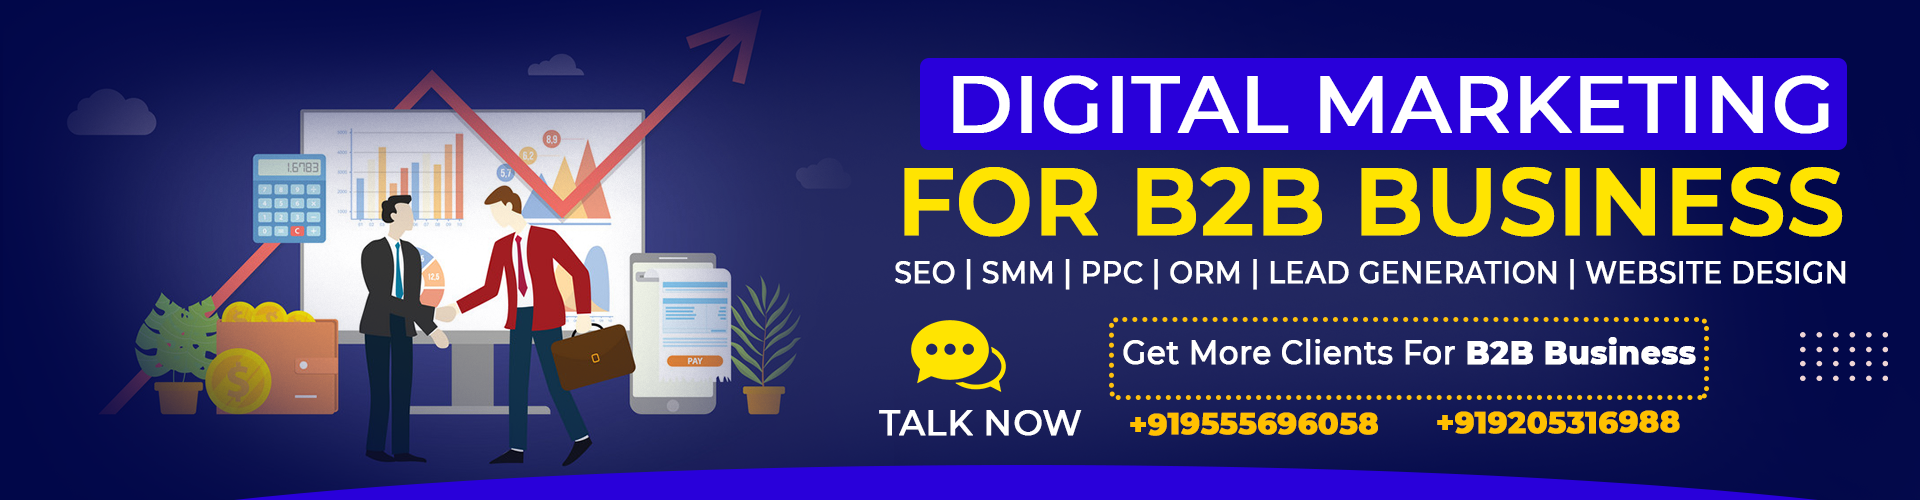 digital marketing for b2b services